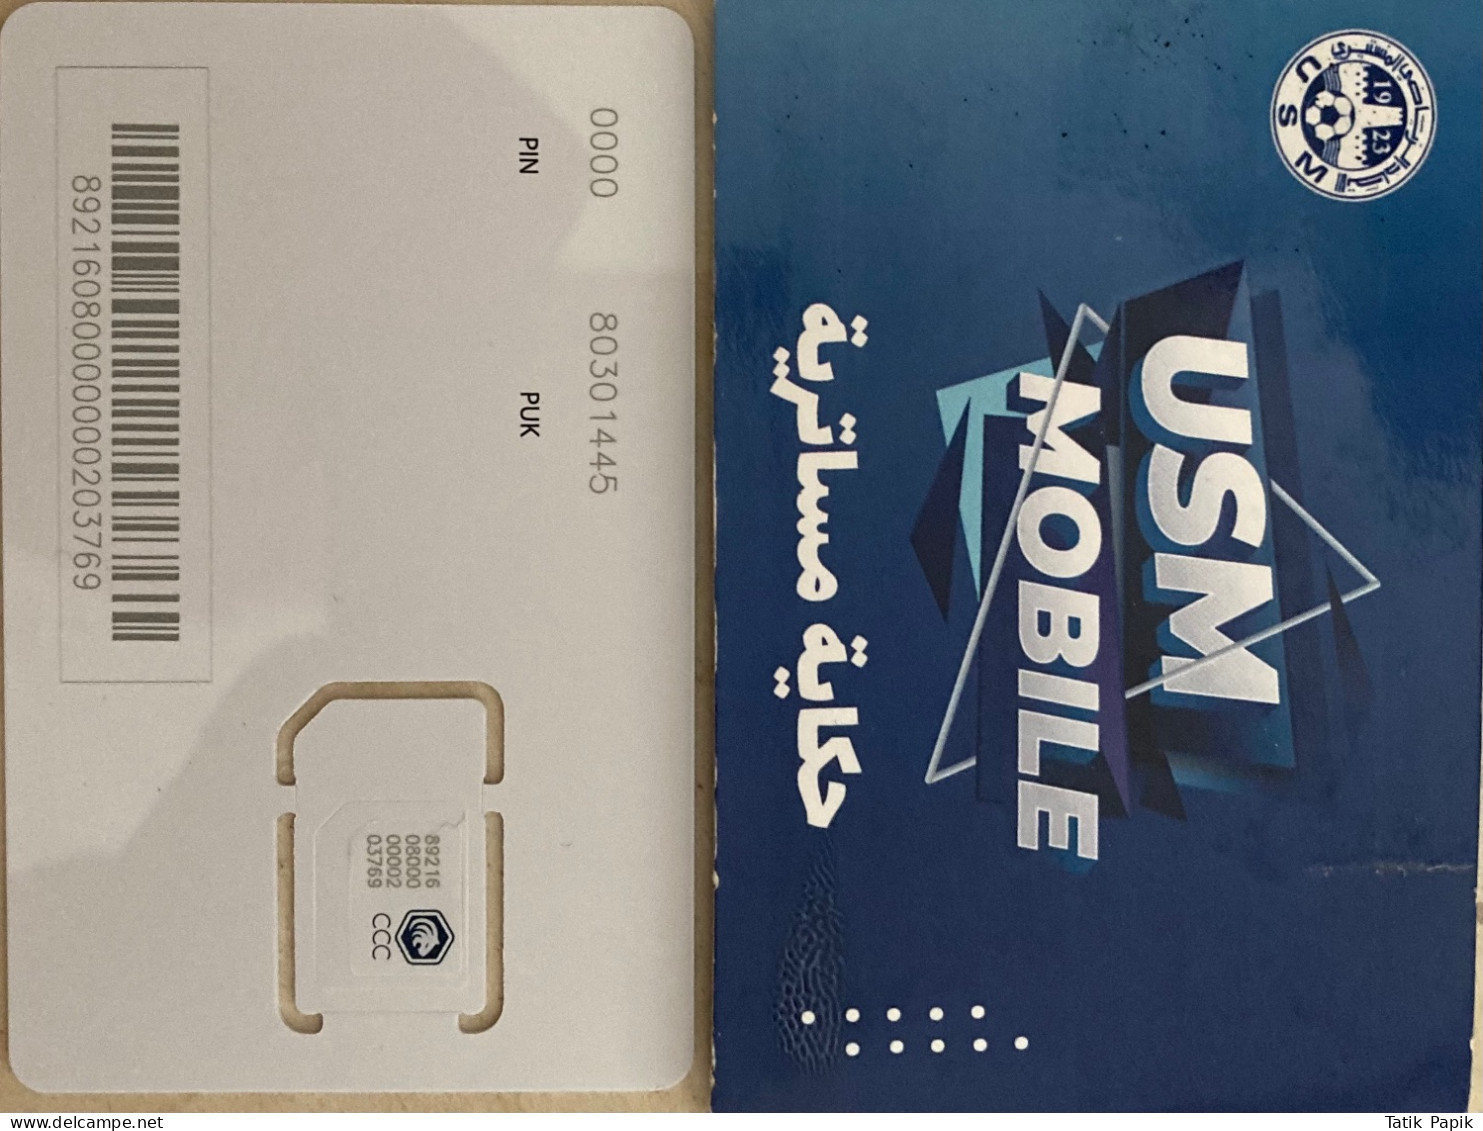 Tunisie Tunisia Phone Card Telephone Football Club SIM GSM Never Used Mobile USM Monastir Football New 3G 4G 5G - Tunisia